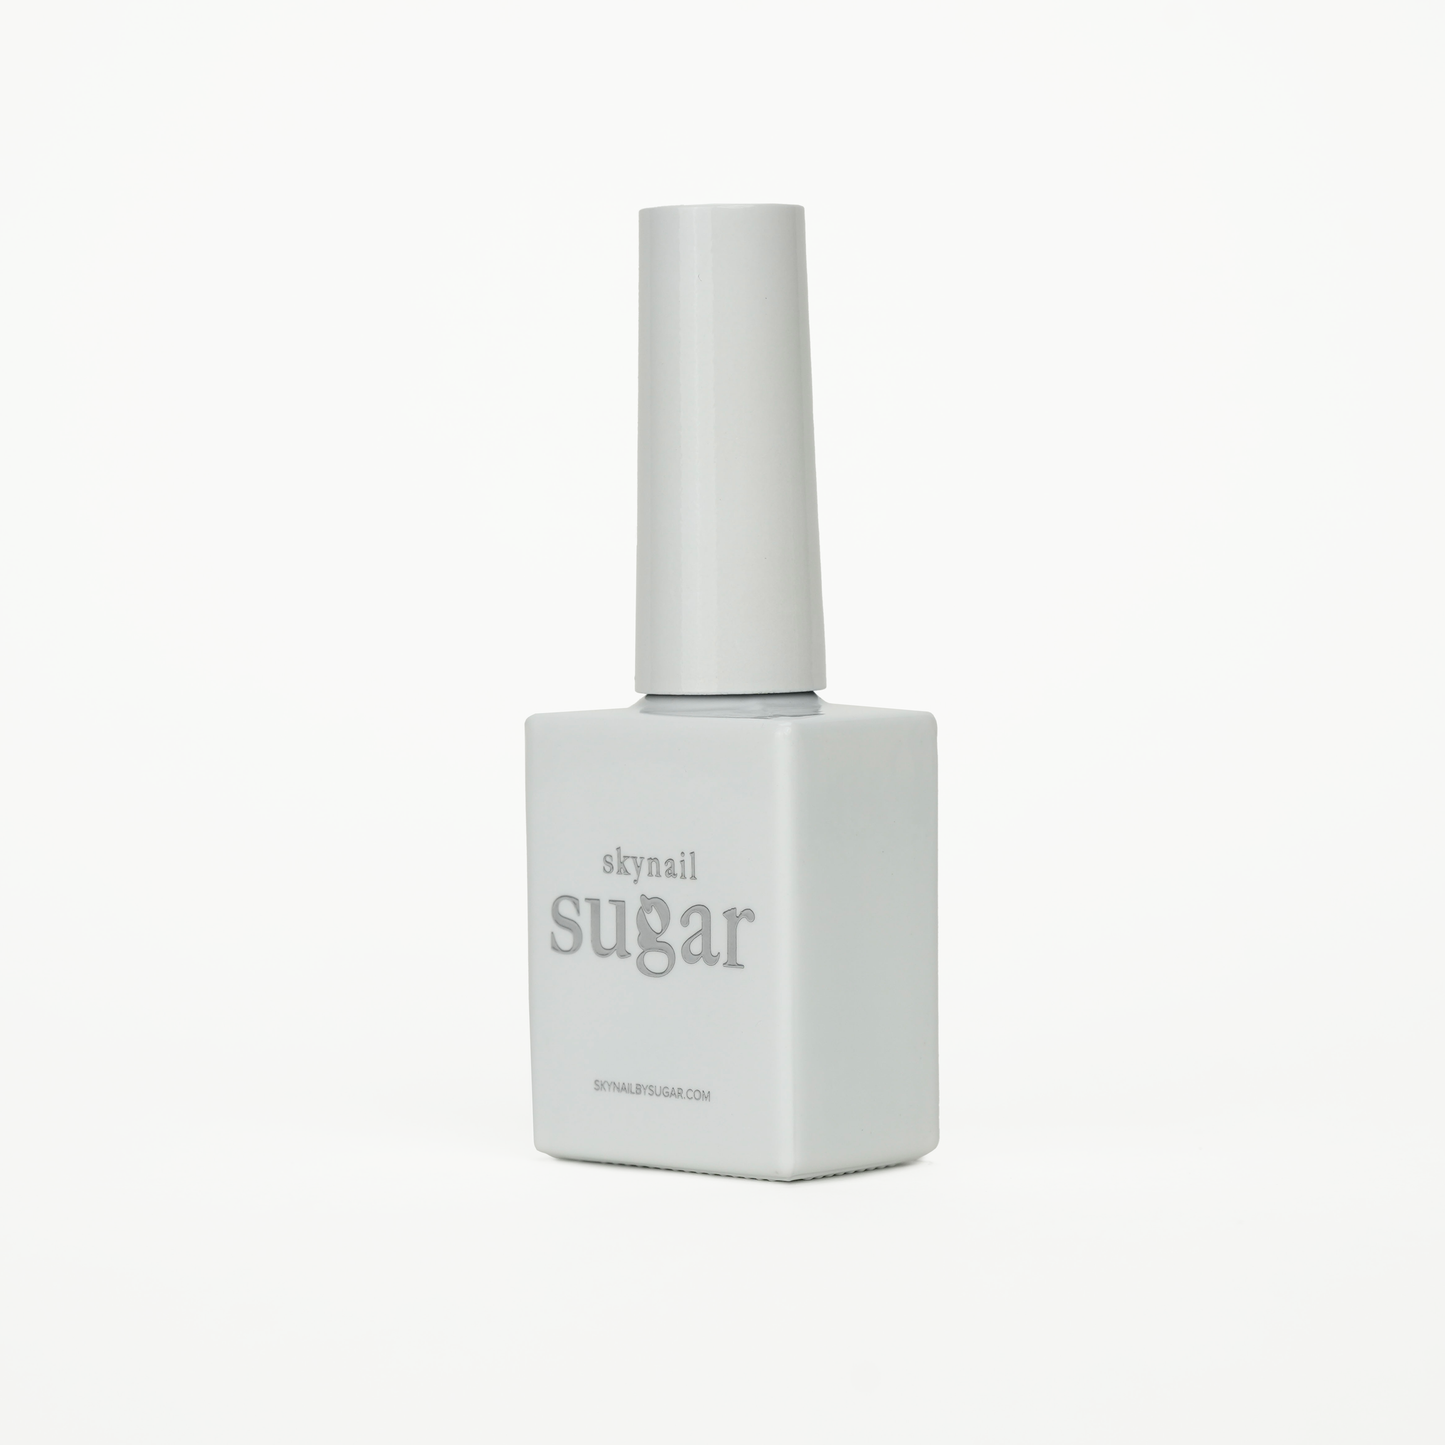 Bottle of syrup sn014 gel nail polish from Skynailbysugar